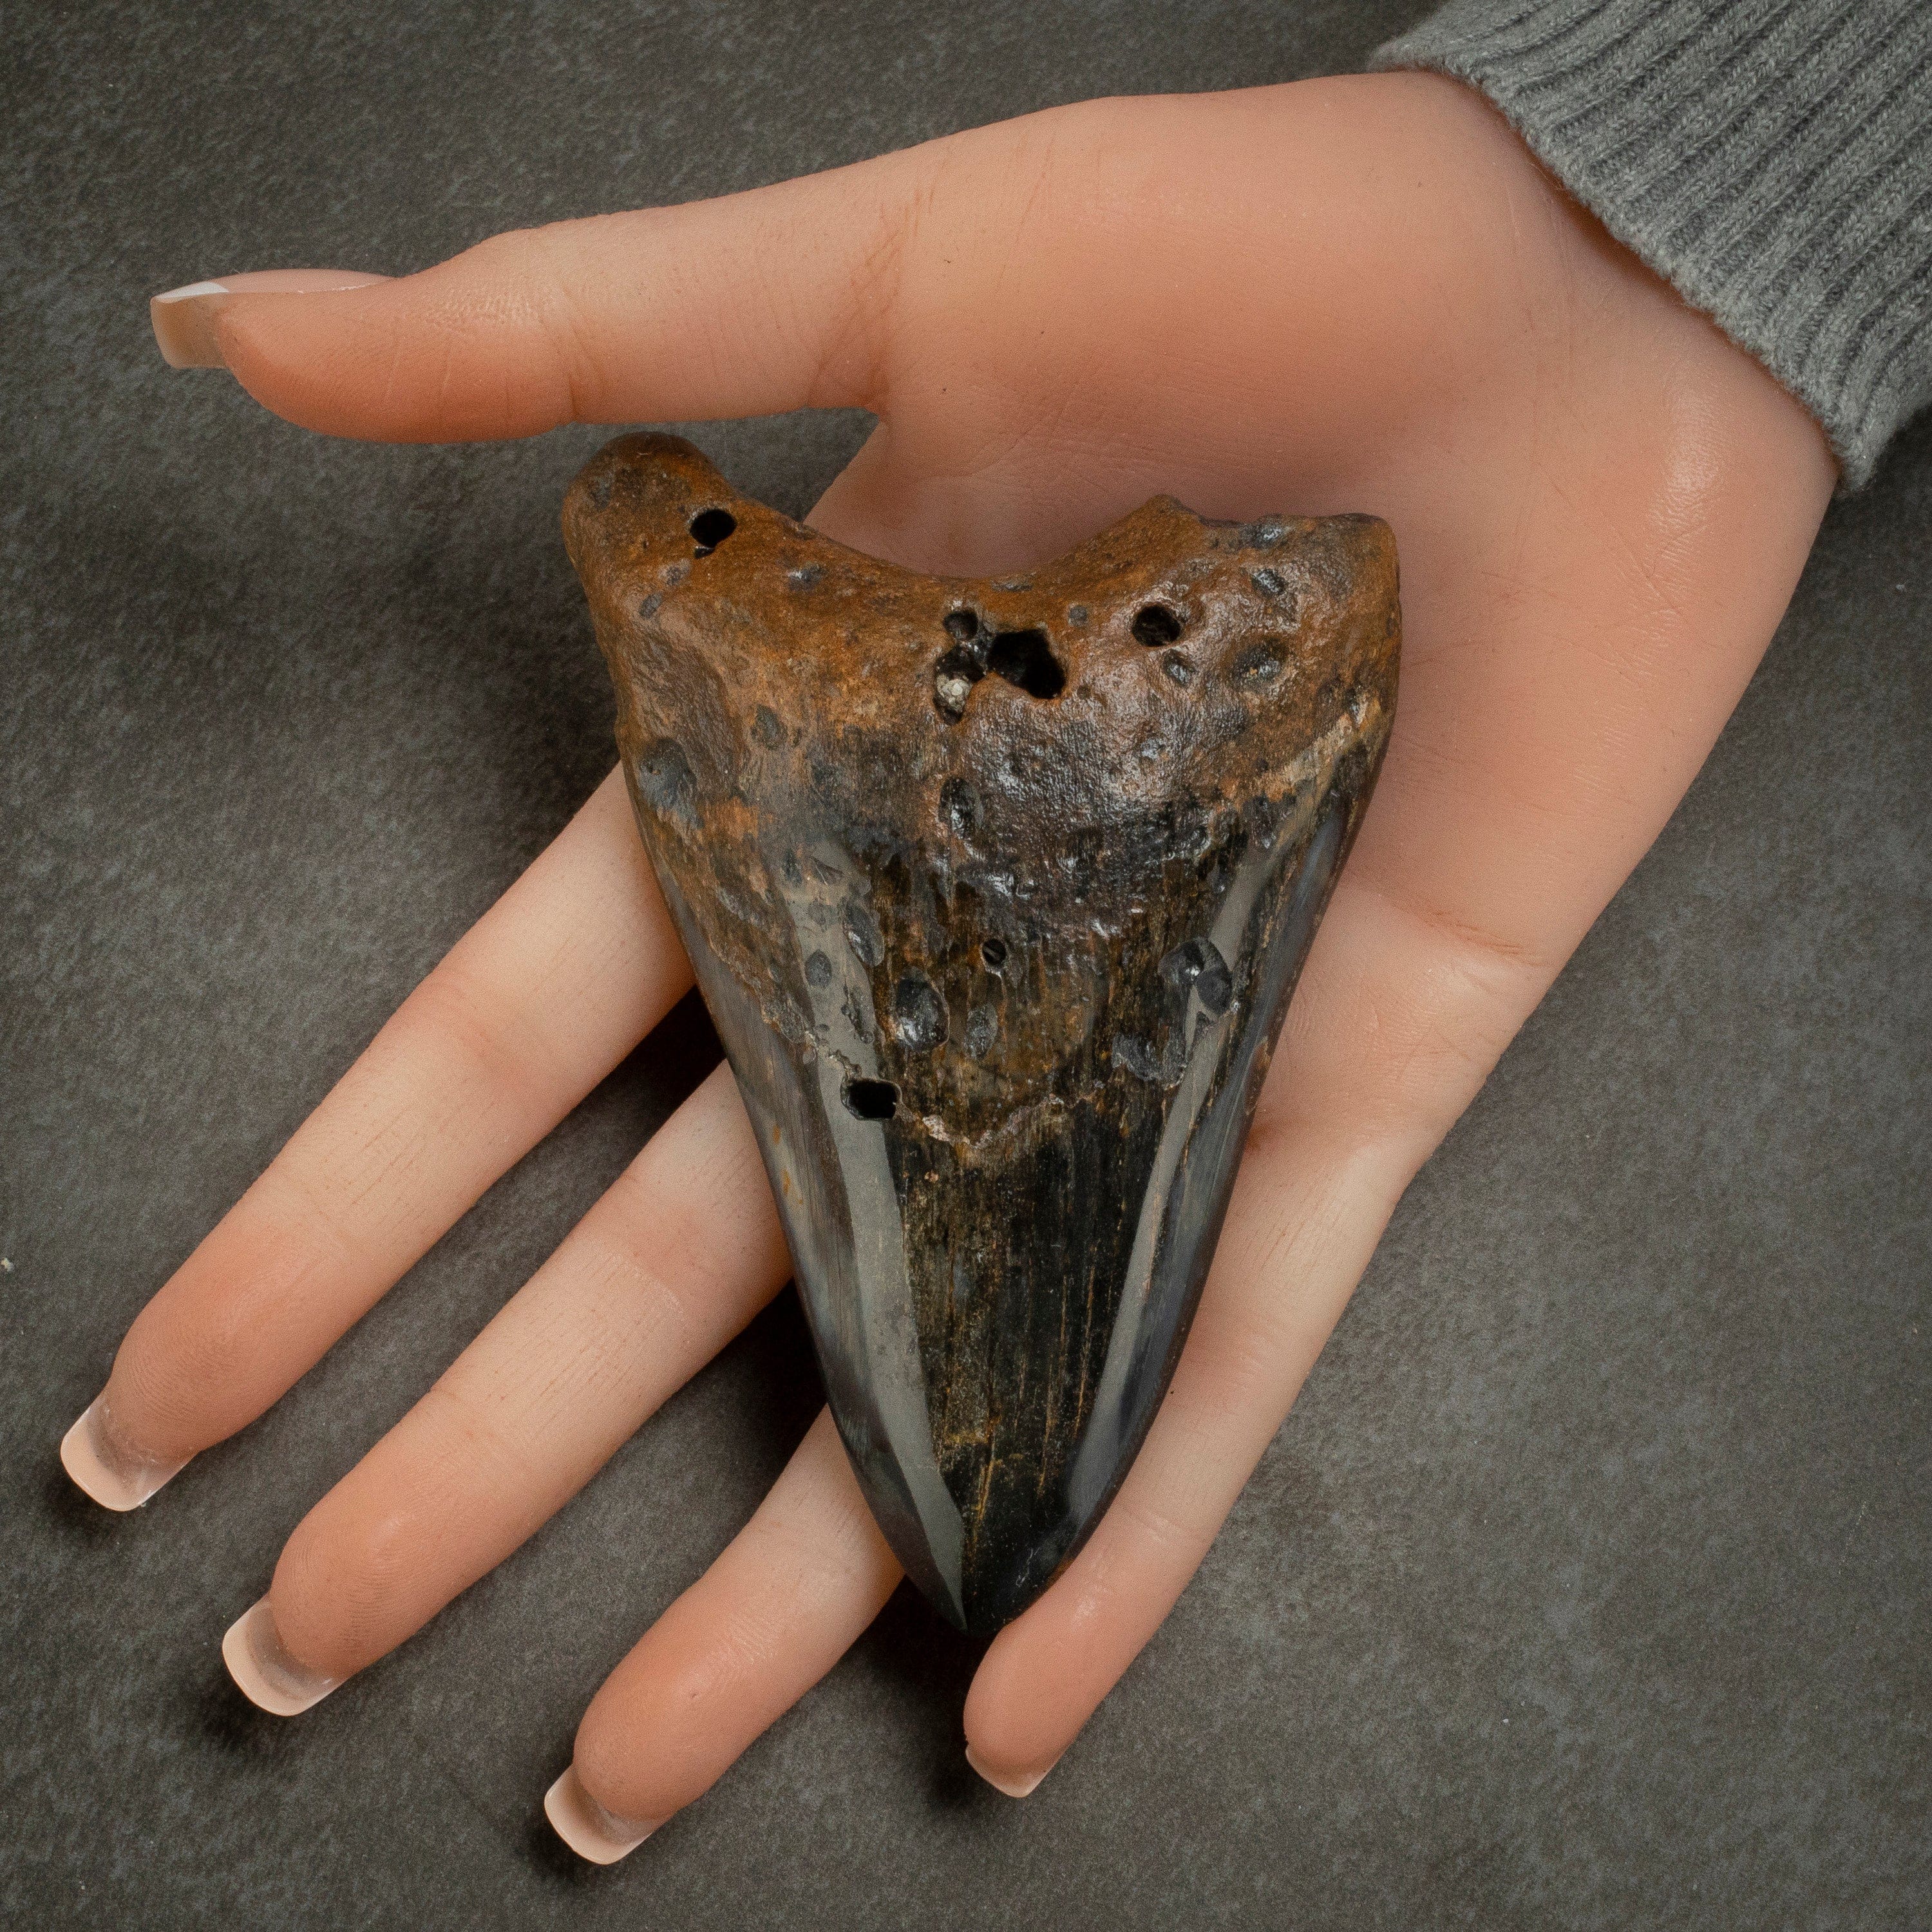 Kalifano Megalodon Teeth Megalodon Tooth from South Carolina - 4.2" ST2000.113